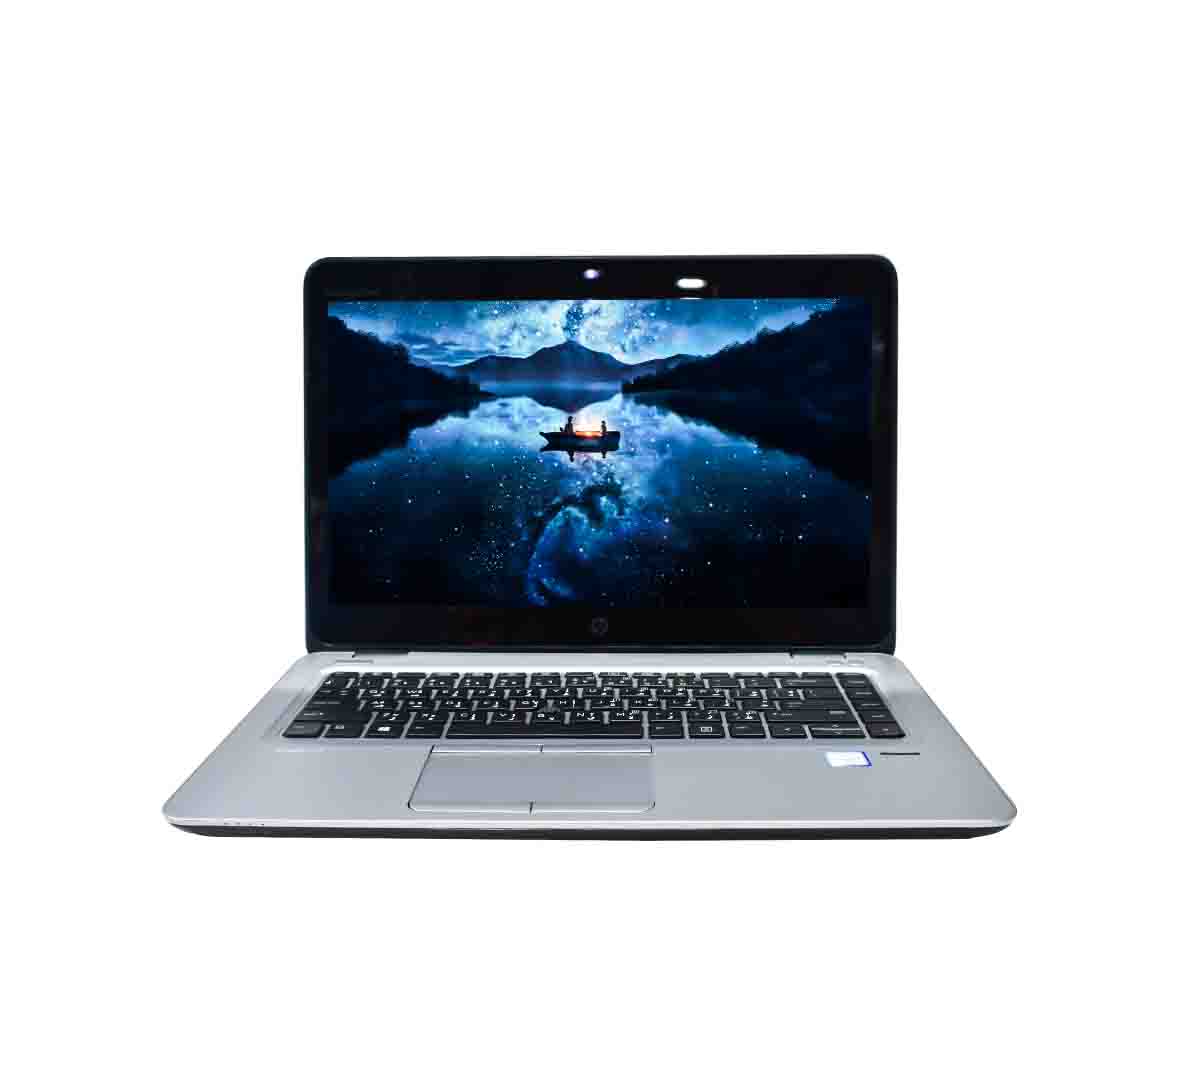 HP EliteBook 840 G3 Business Laptop, Intel Core i5-6th Gen. CPU, 4GB RAM, 500GB HDD, 14.1 inch Display, Windows 10 Pro, Refurbished Laptop